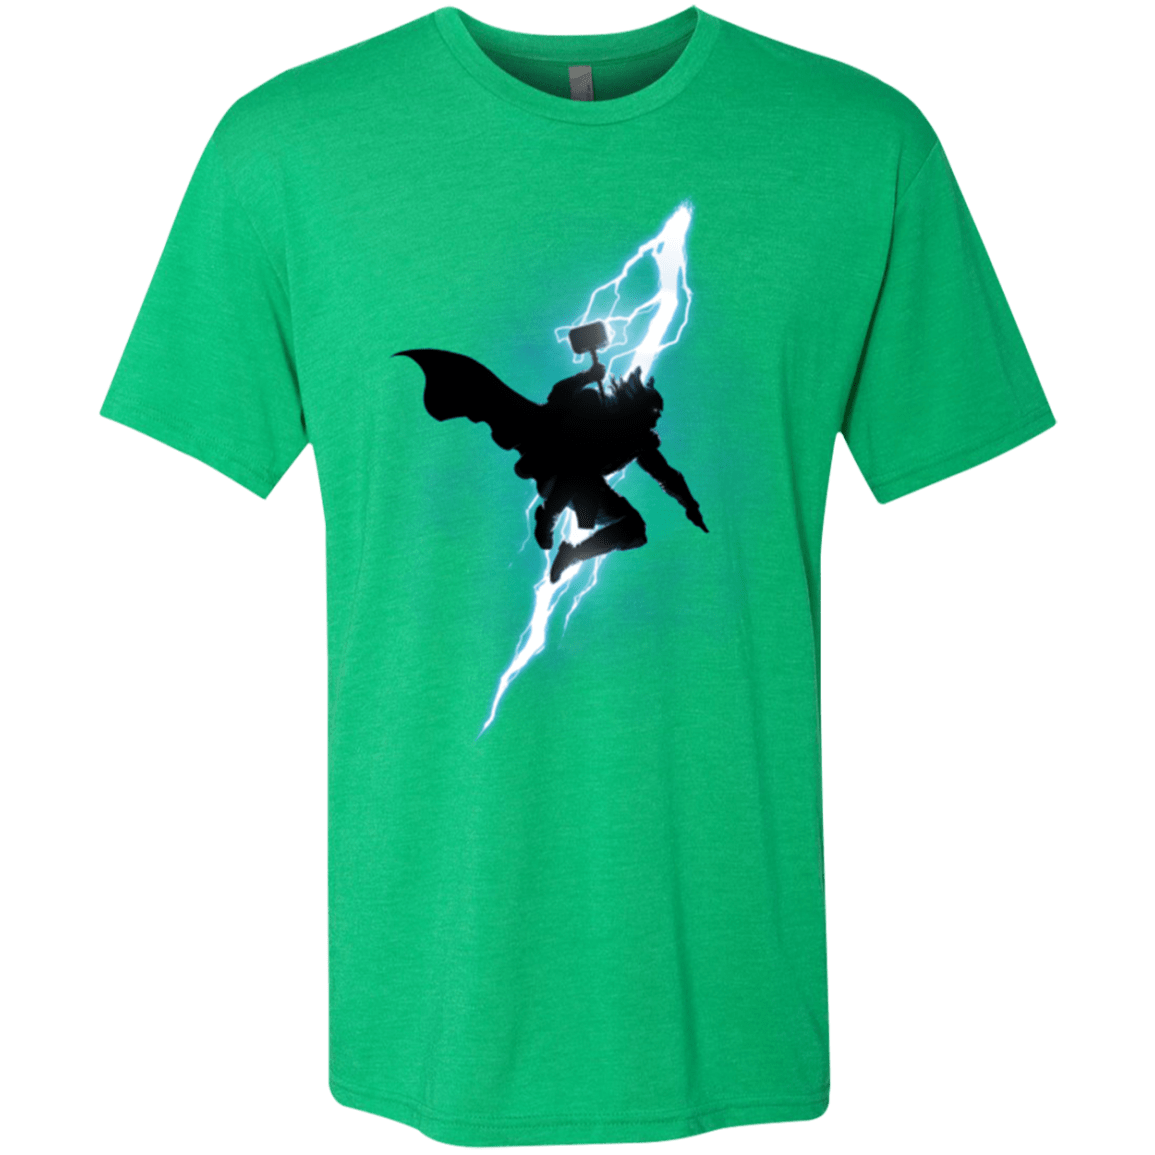 T-Shirts Envy / Small The Thunder God Returns Men's Triblend T-Shirt